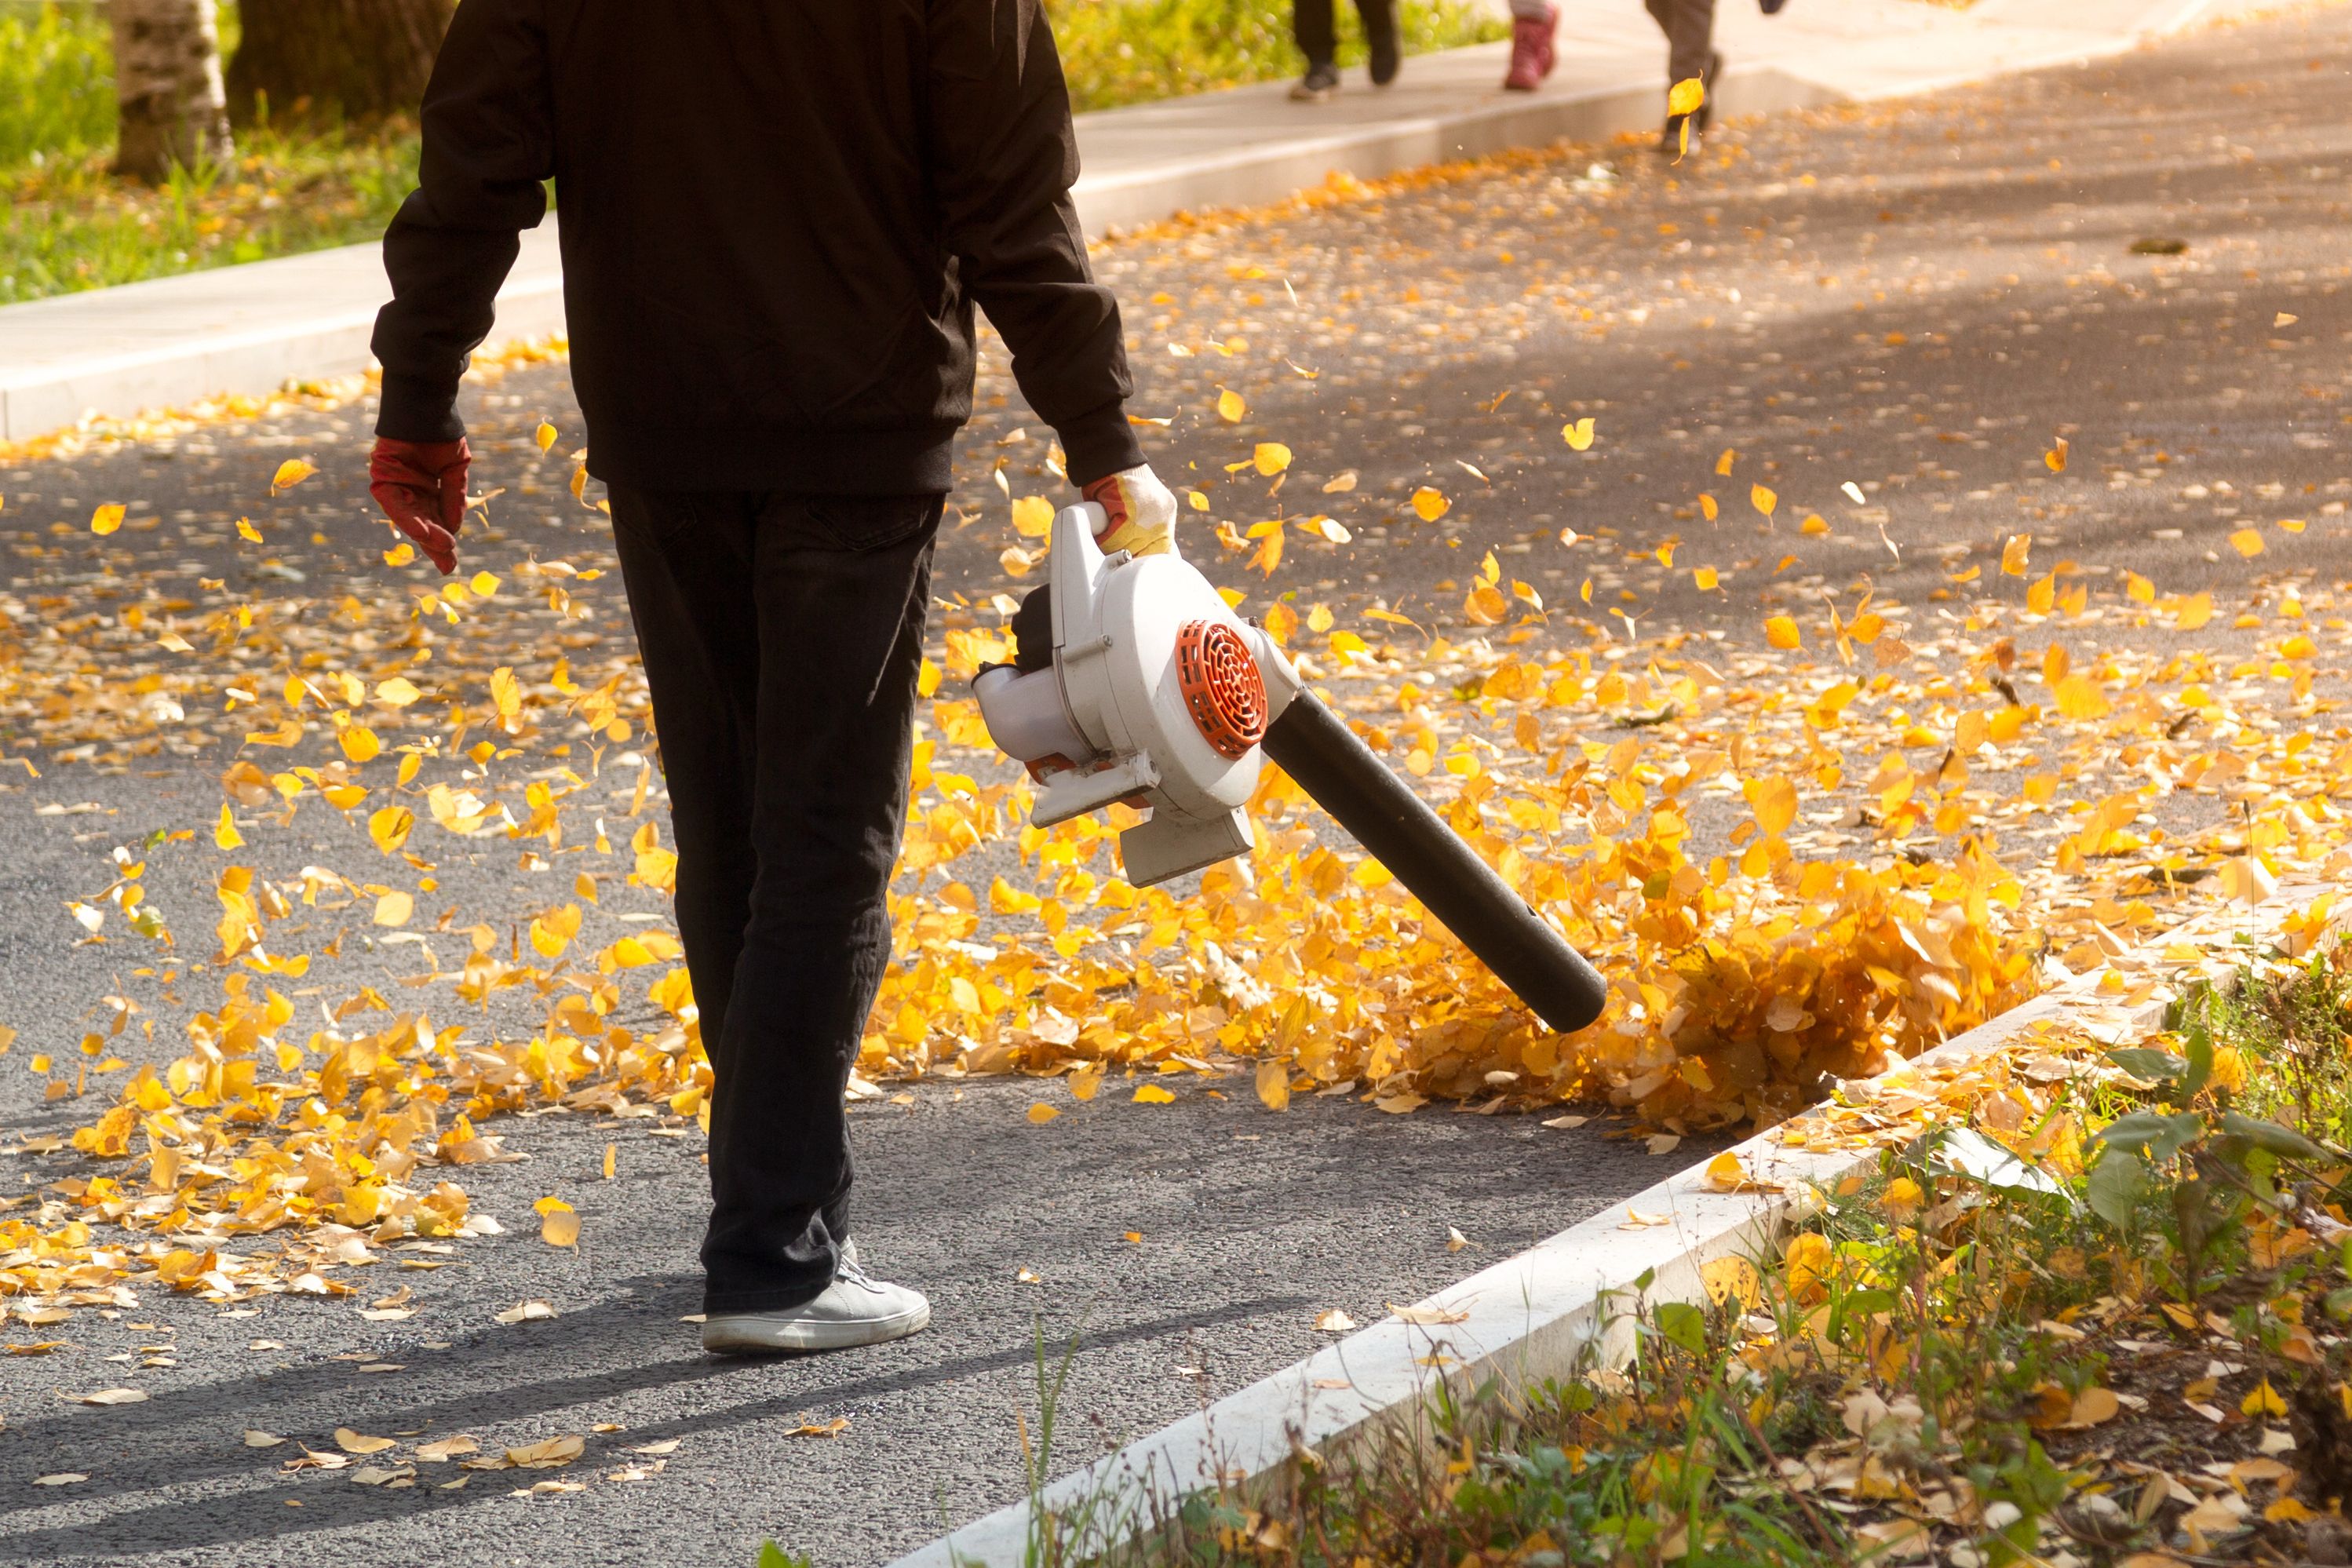 Walk-behind leaf blower Leaf Blowers at